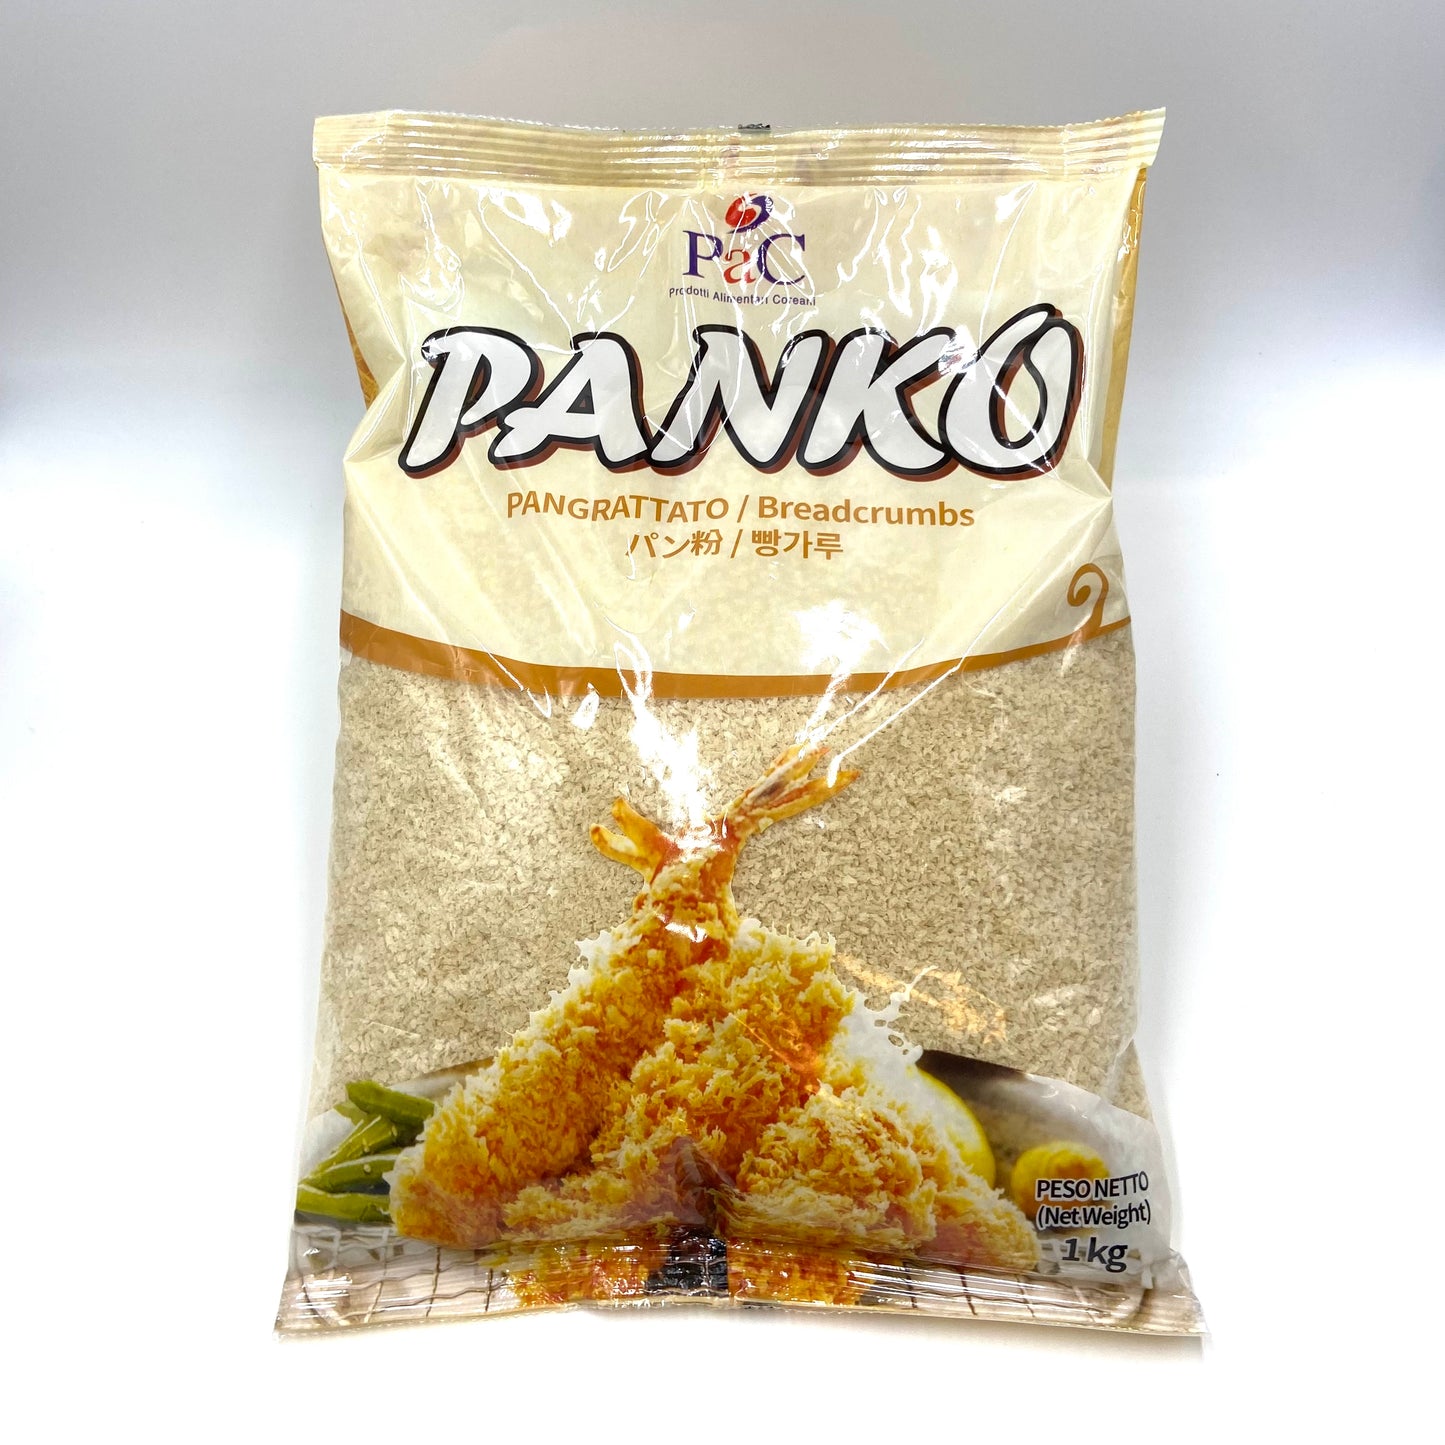 PAC Panko 1kg パン粉